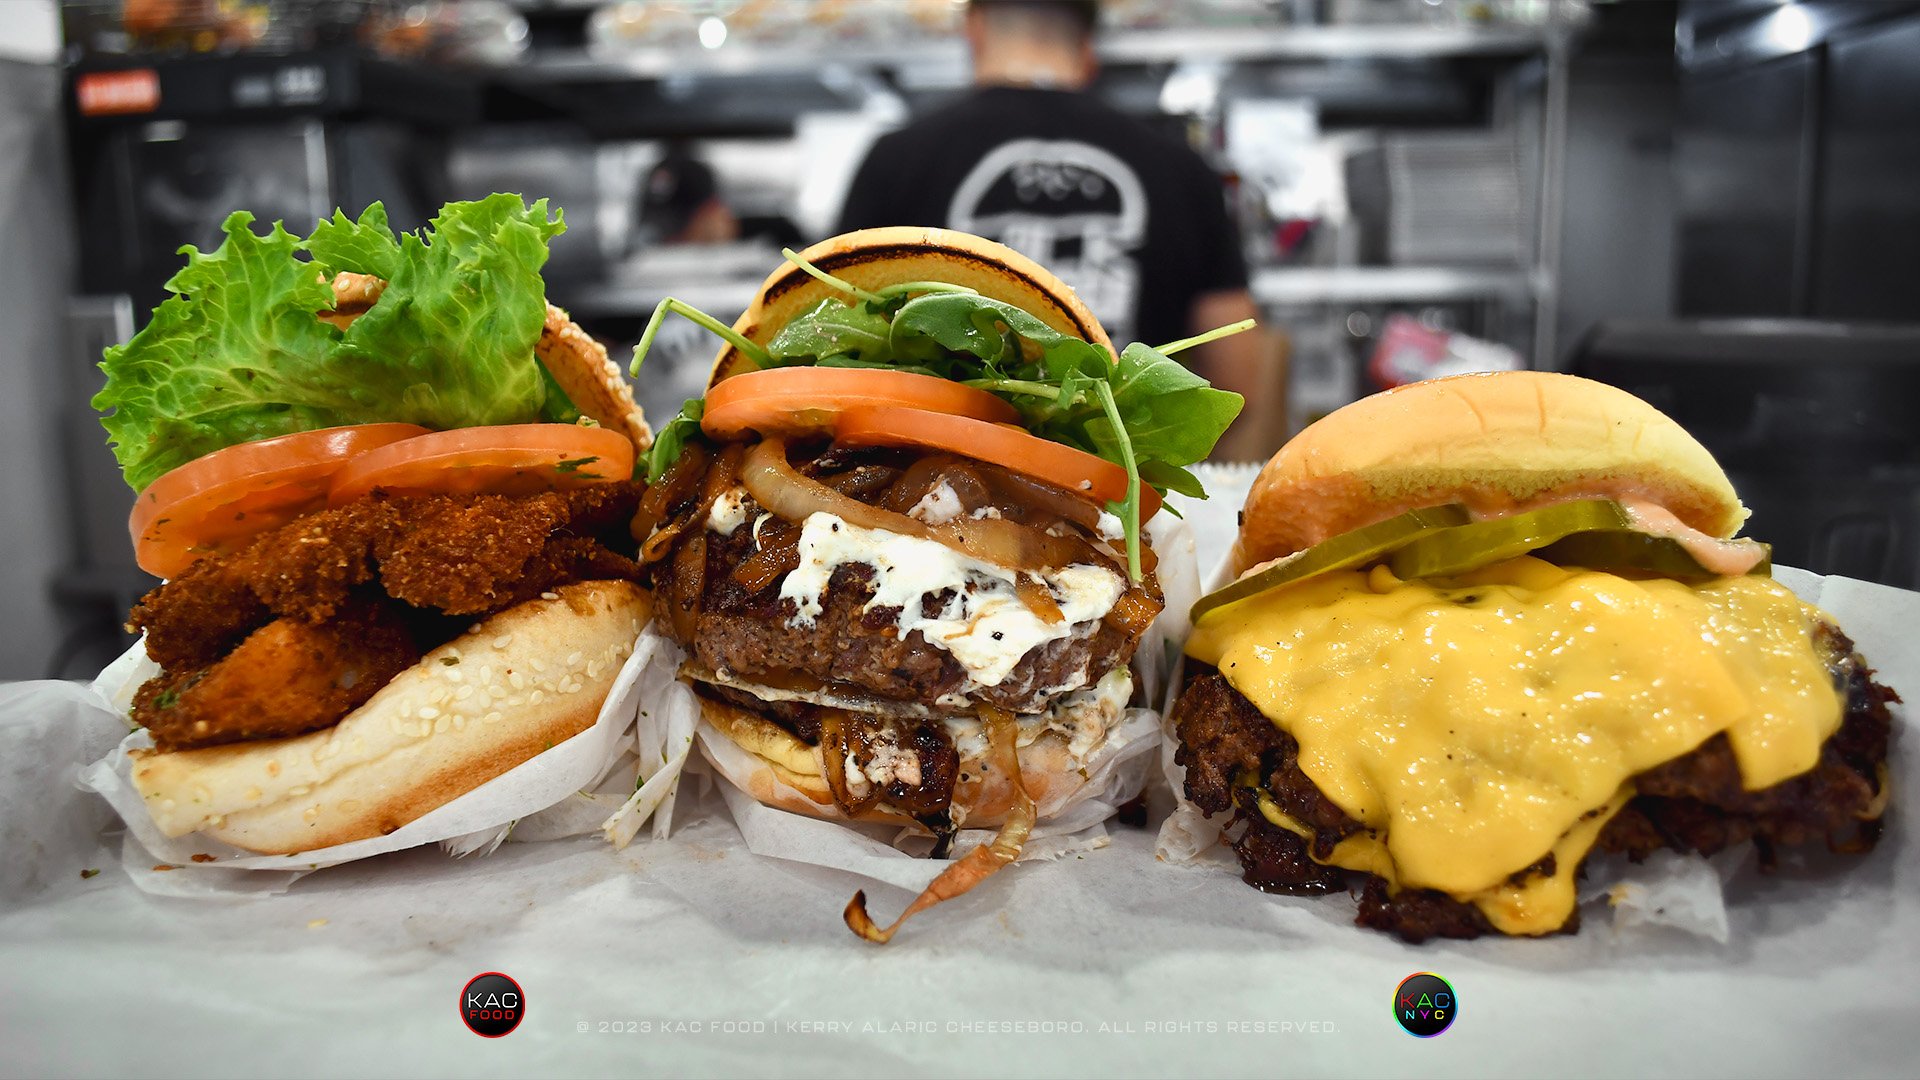 kac_food-230320-milk-burger-fish-burger-bx-goat-burger-smash-burger-3-1920-hor.jpg